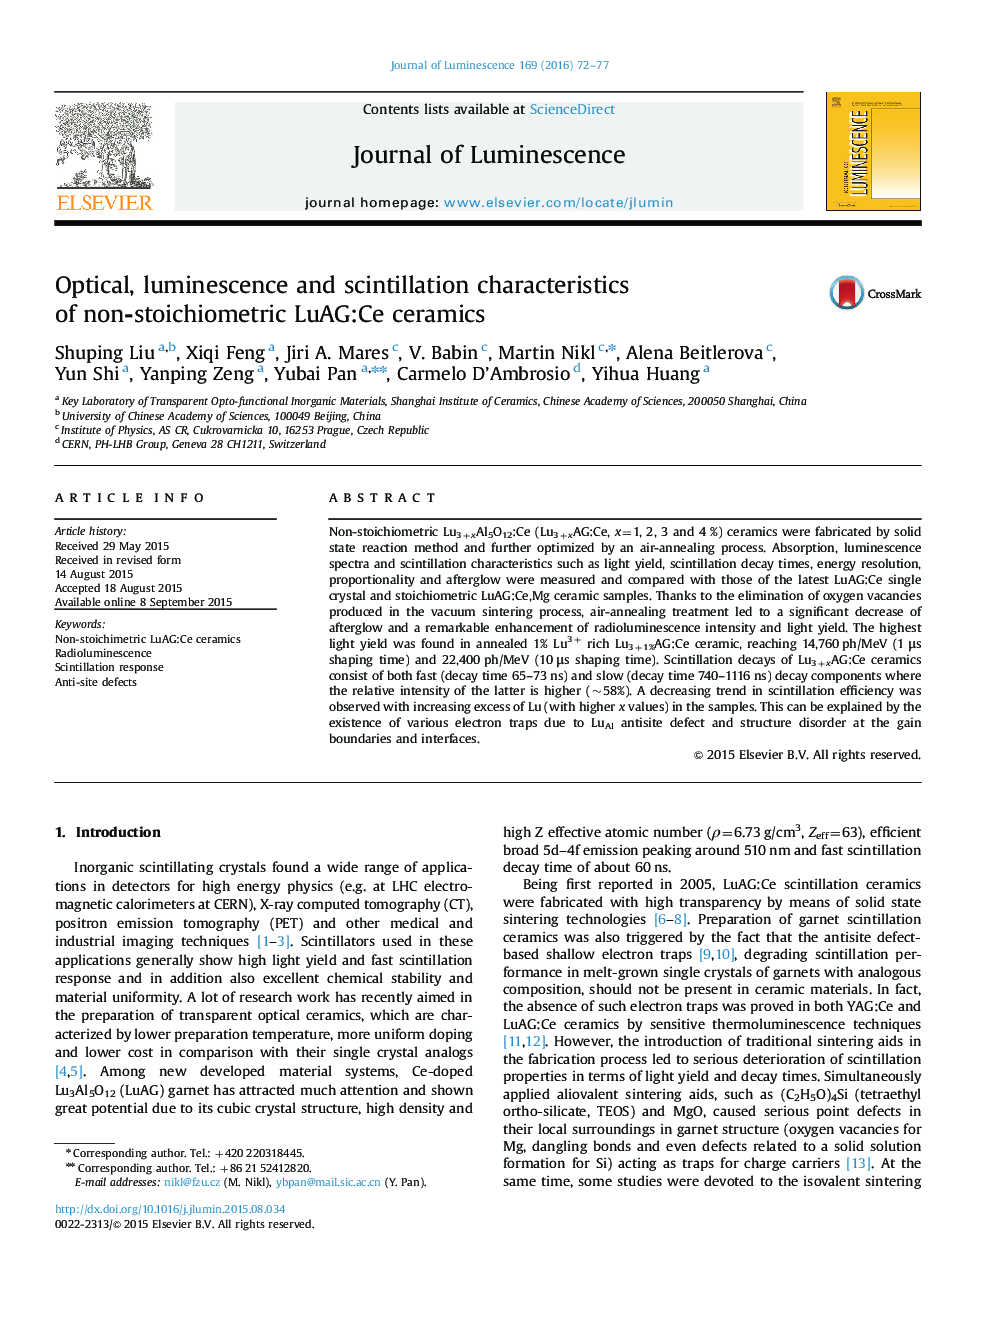 Optical, luminescence and scintillation characteristics of non-stoichiometric LuAG:Ce ceramics